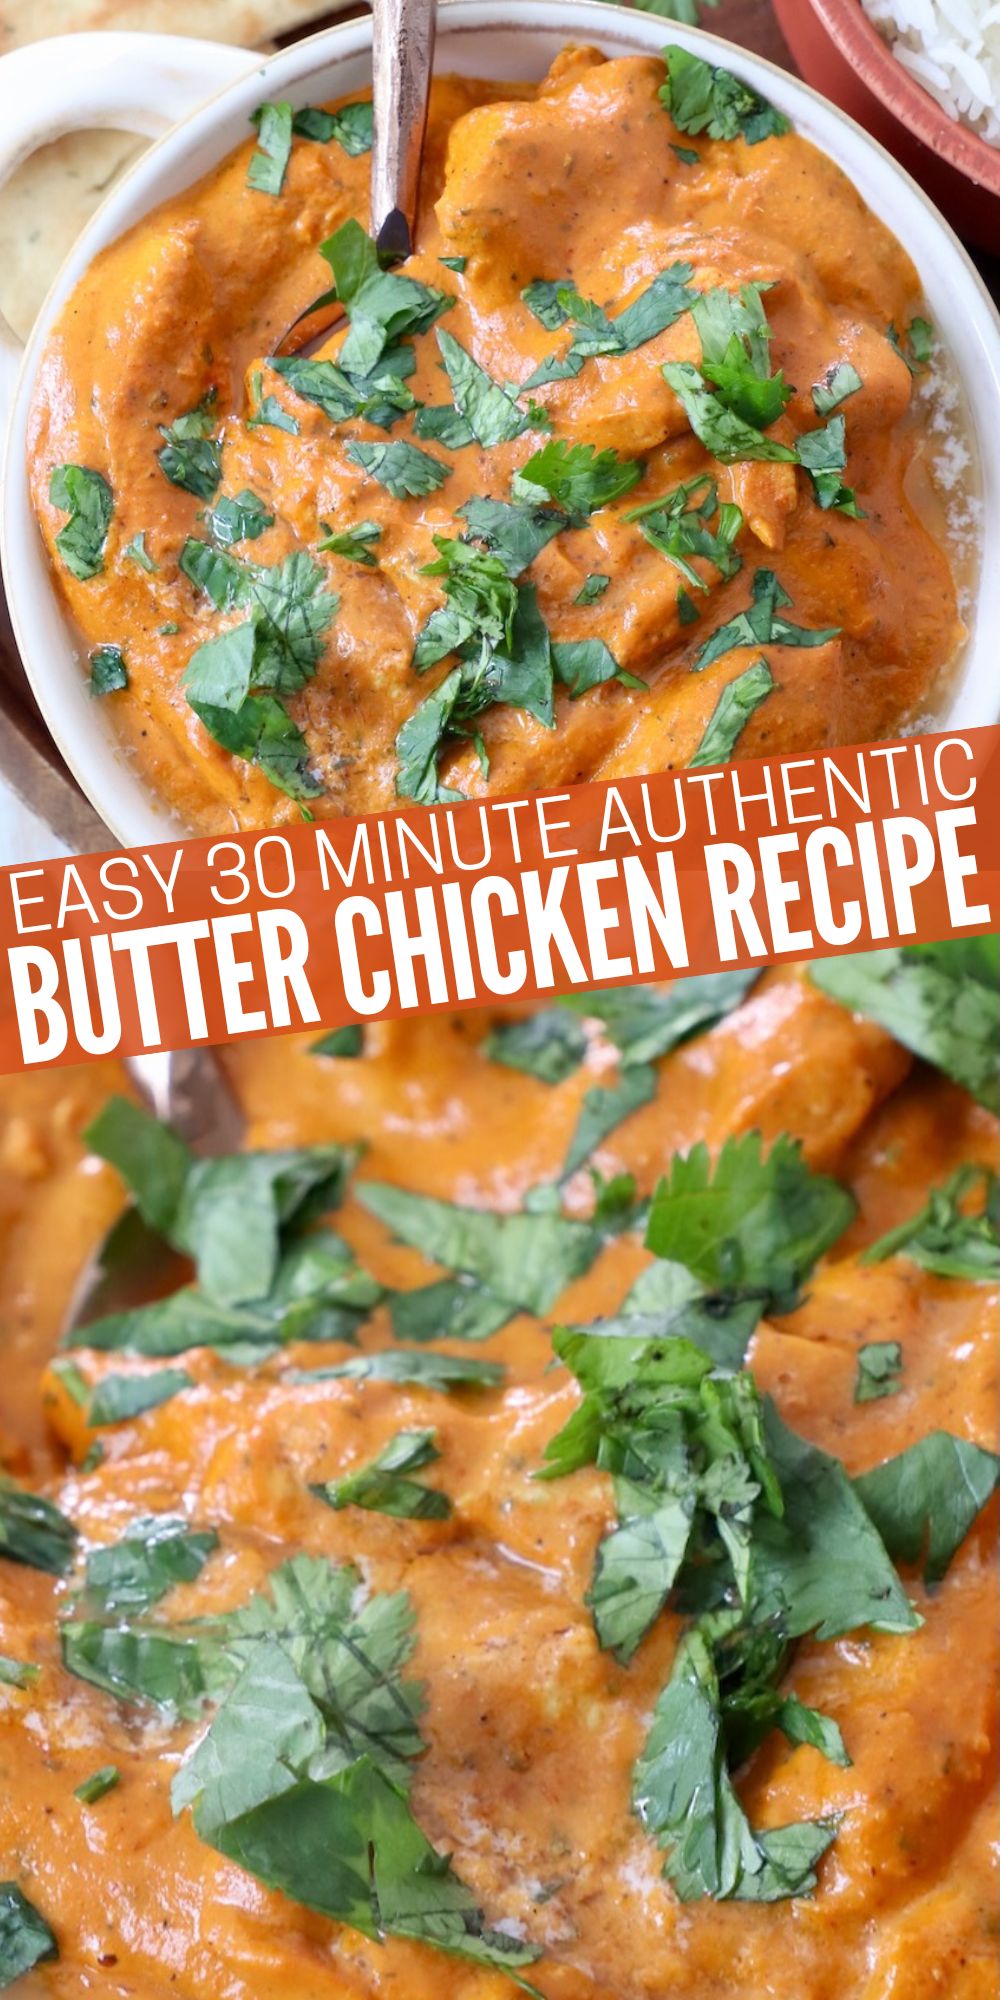 Easy Butter Chicken Recipe - WhitneyBond.com